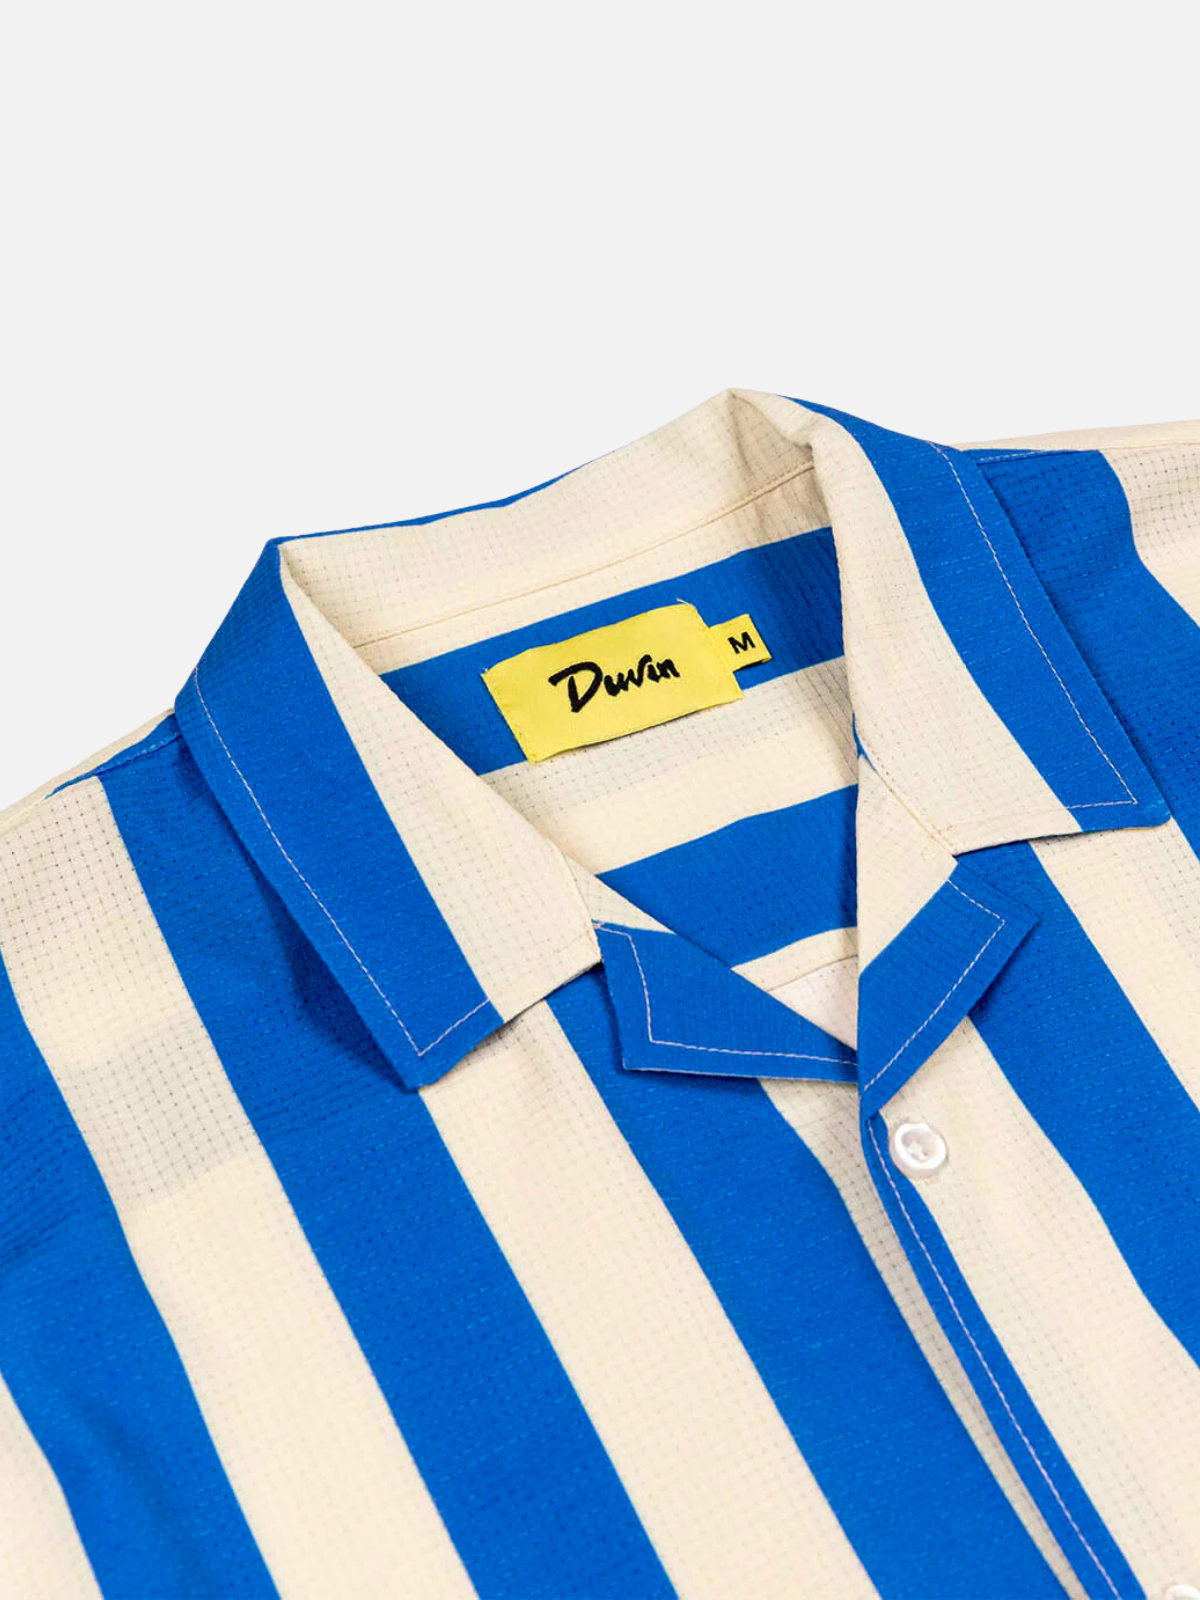 duvin traveler button up blue white stripe leisure shirt polyester spandex blend cuban collar kempt athens ga georgia men's clothing store